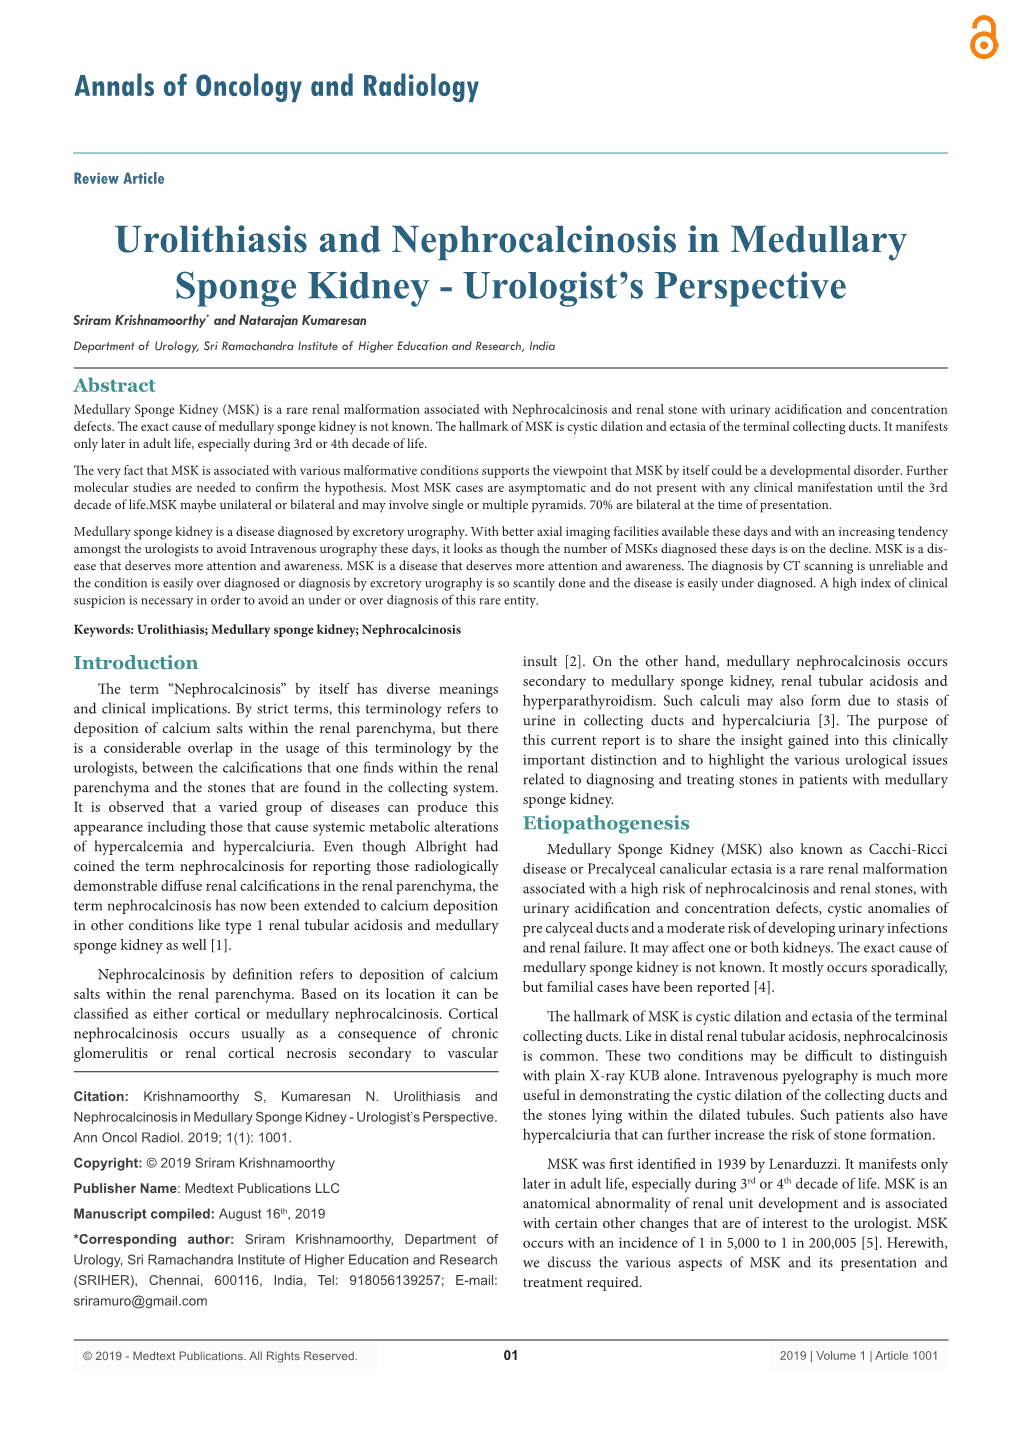 Urolithiasis and Nephrocalcinosis in Medullary